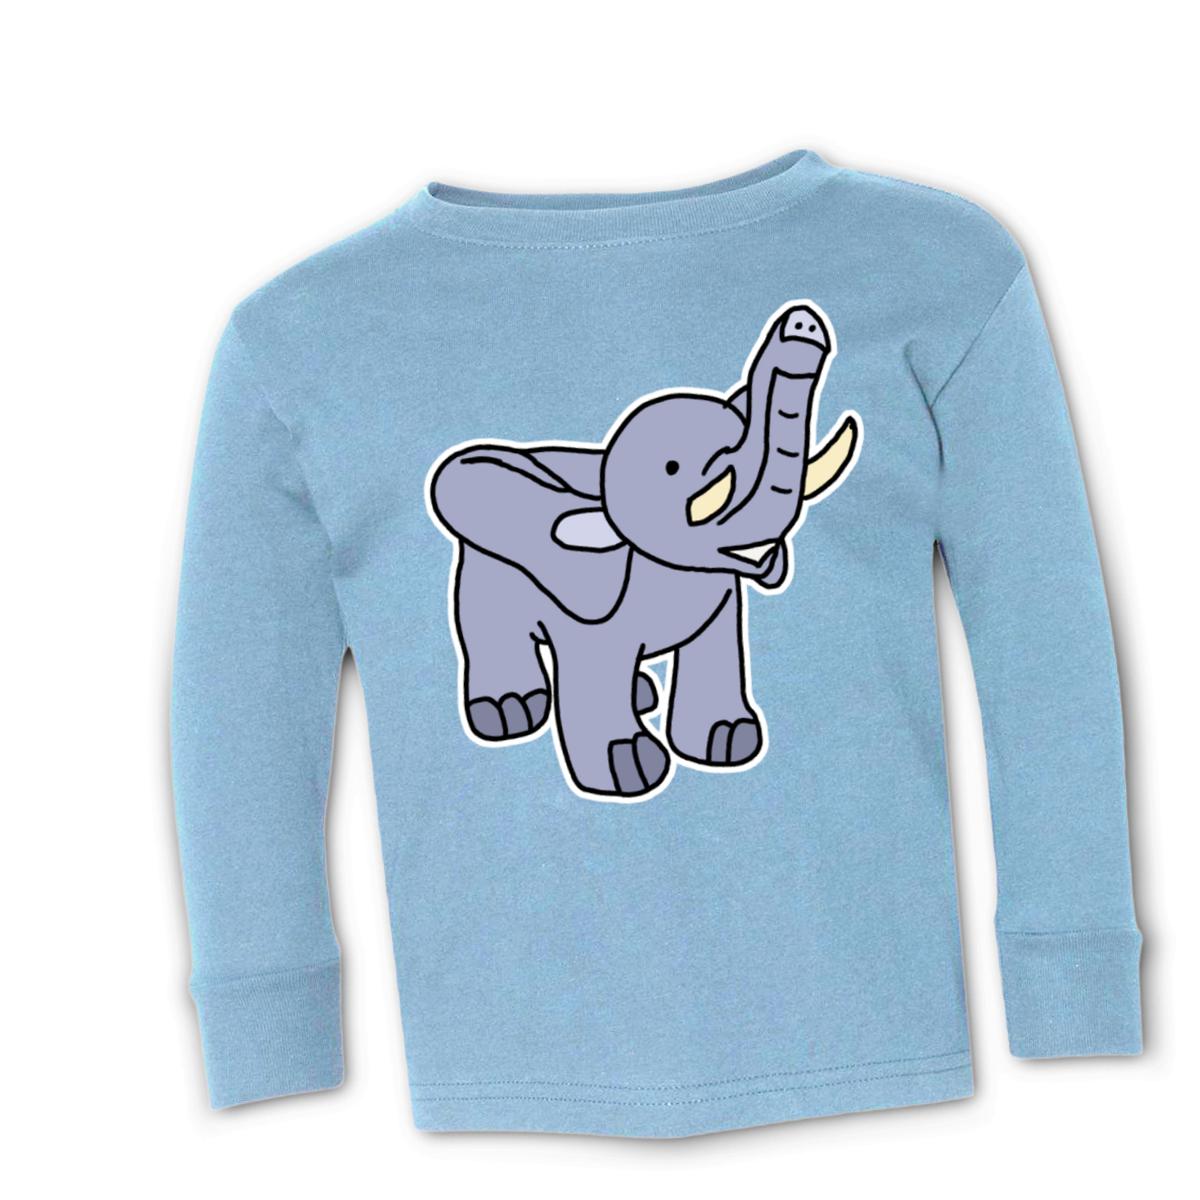 Toy Elephant Toddler Long Sleeve Tee 56T light-blue